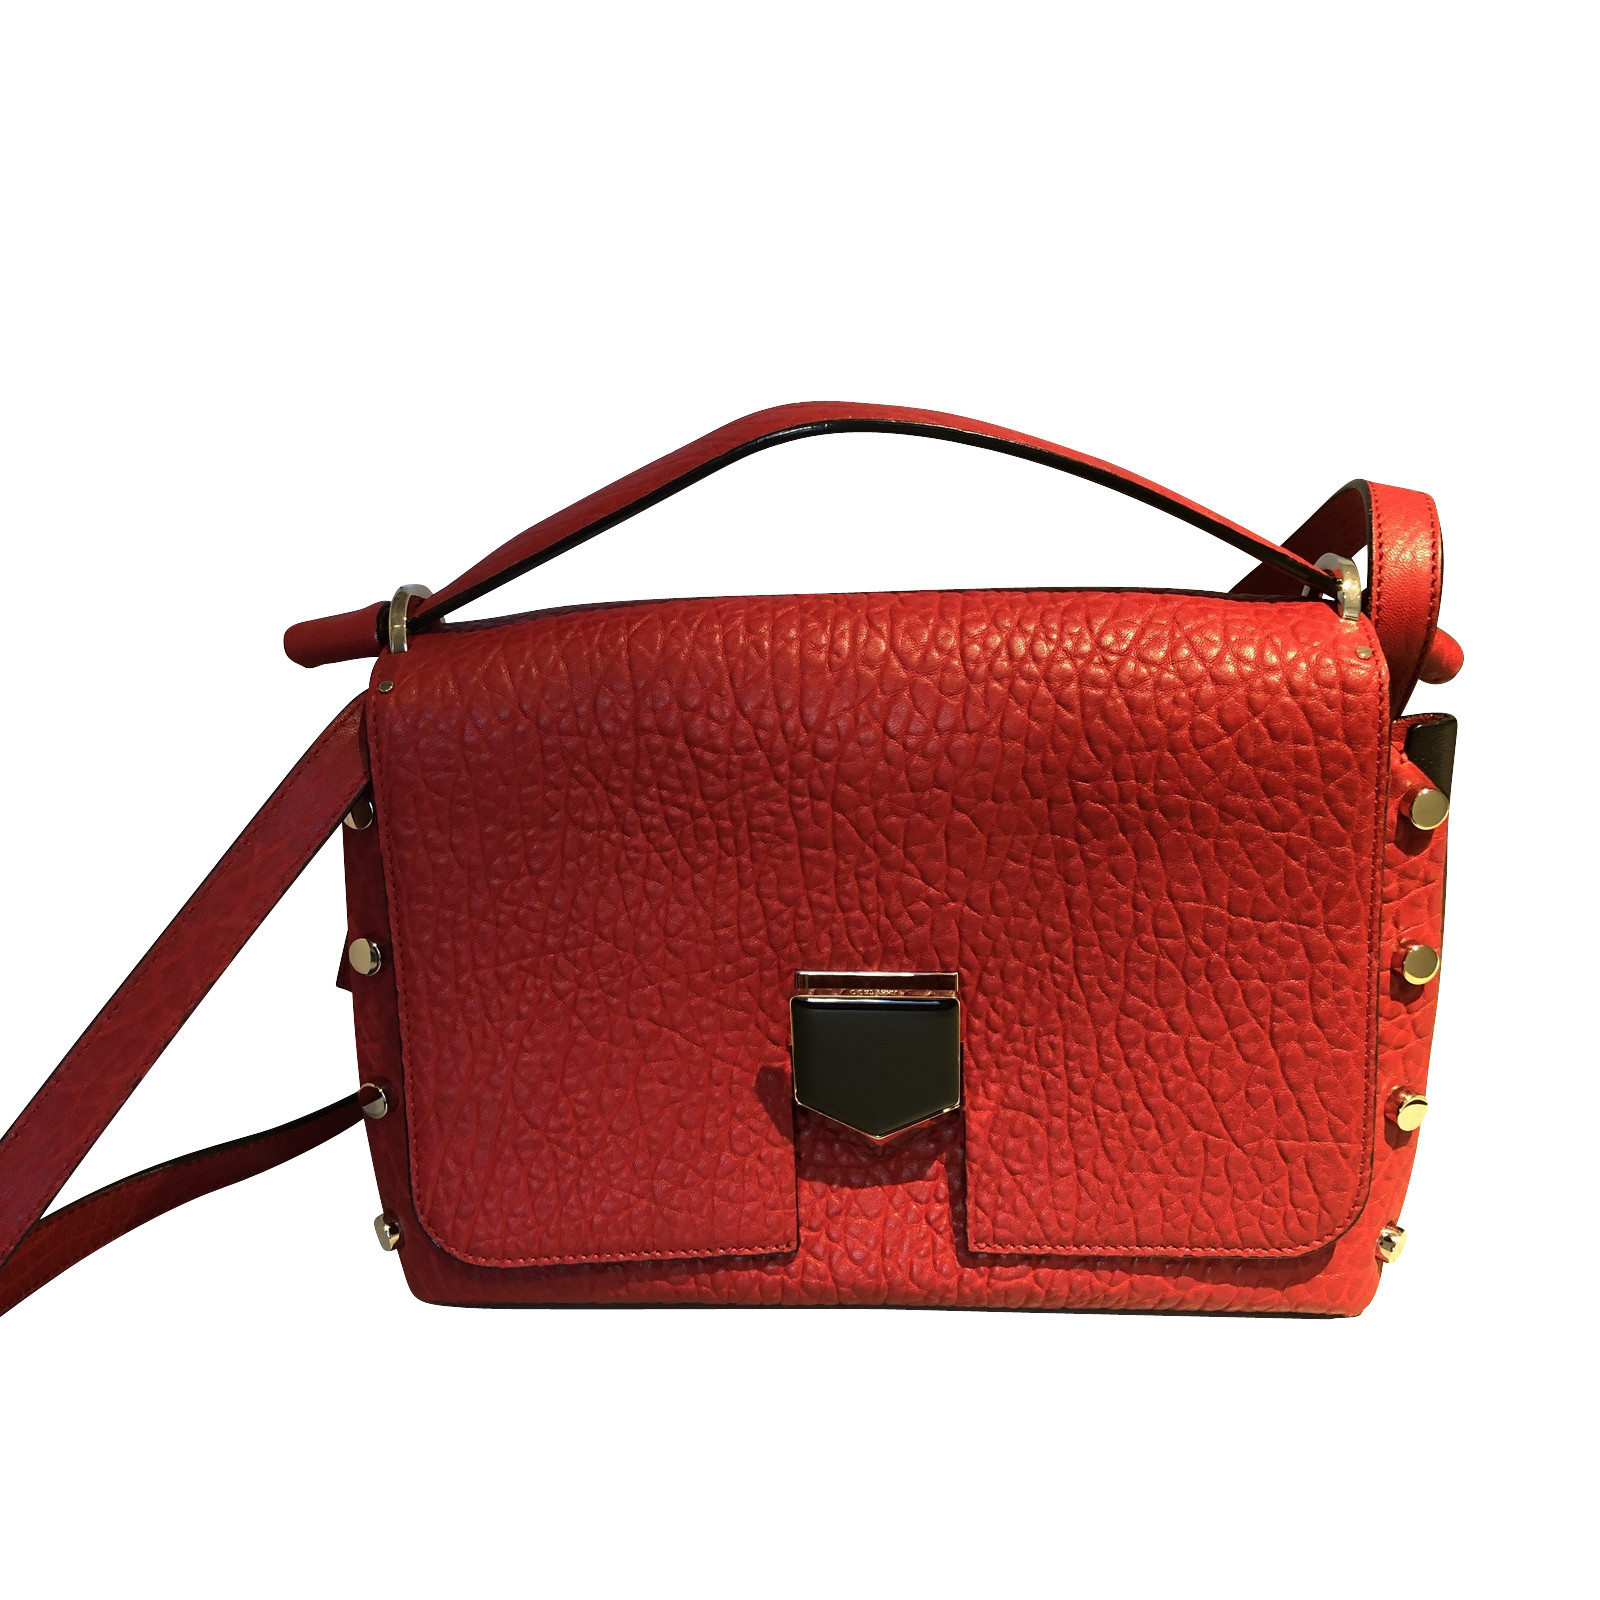 JIMMY CHOO Women's Handtasche aus Leder in Rot | Second Hand